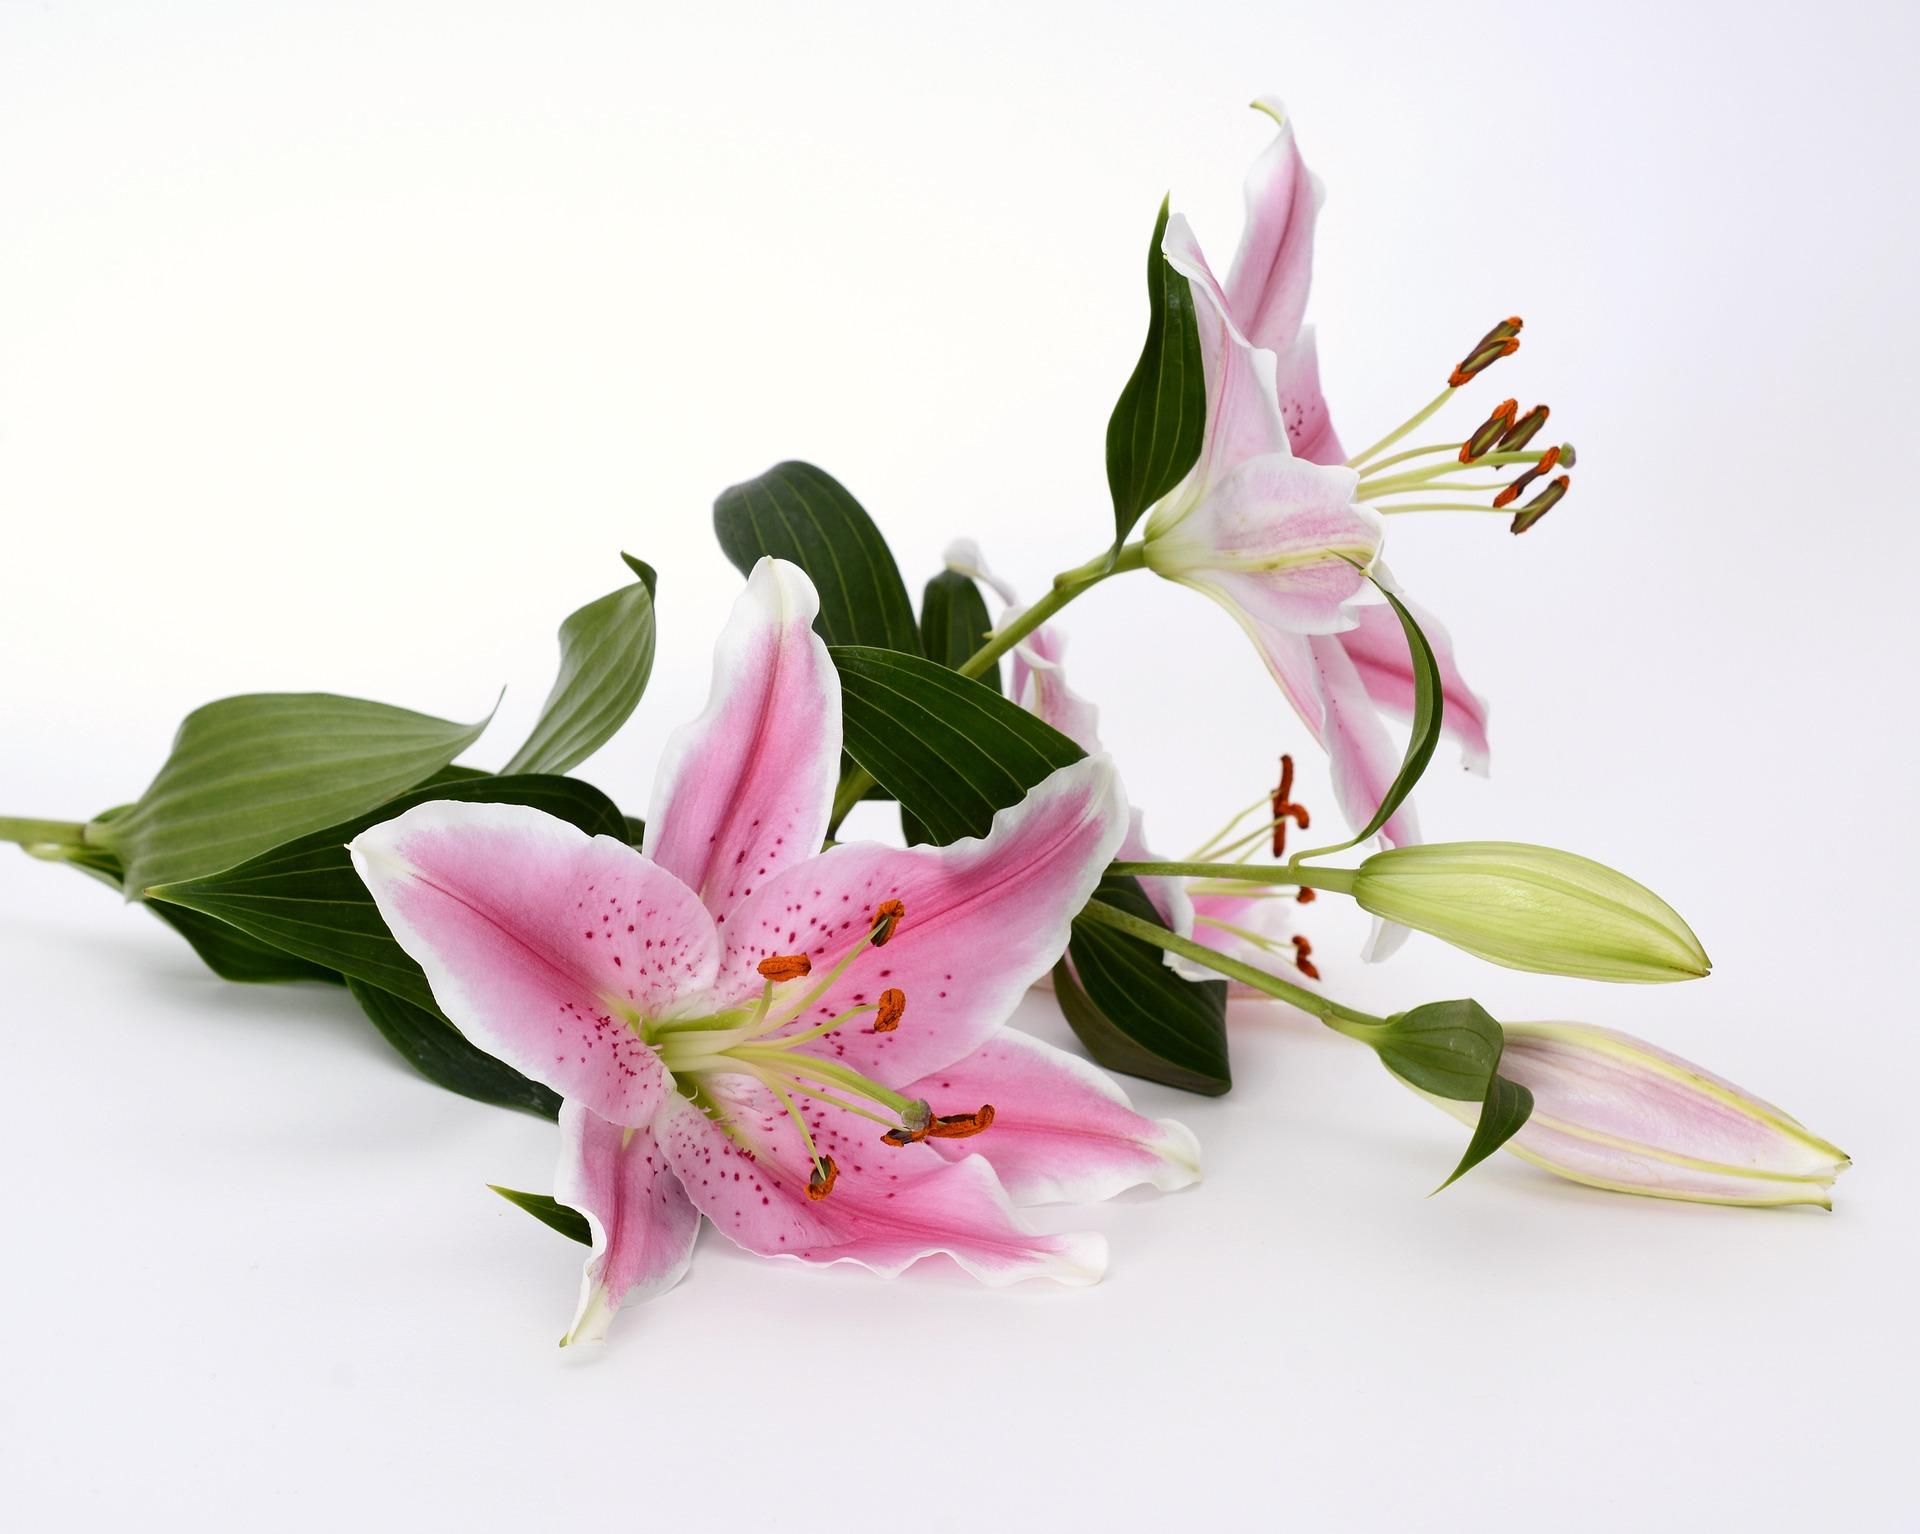 Lilies Oriental 'First Romance' - Romance Lilies from Leo Berbee Bulb Company